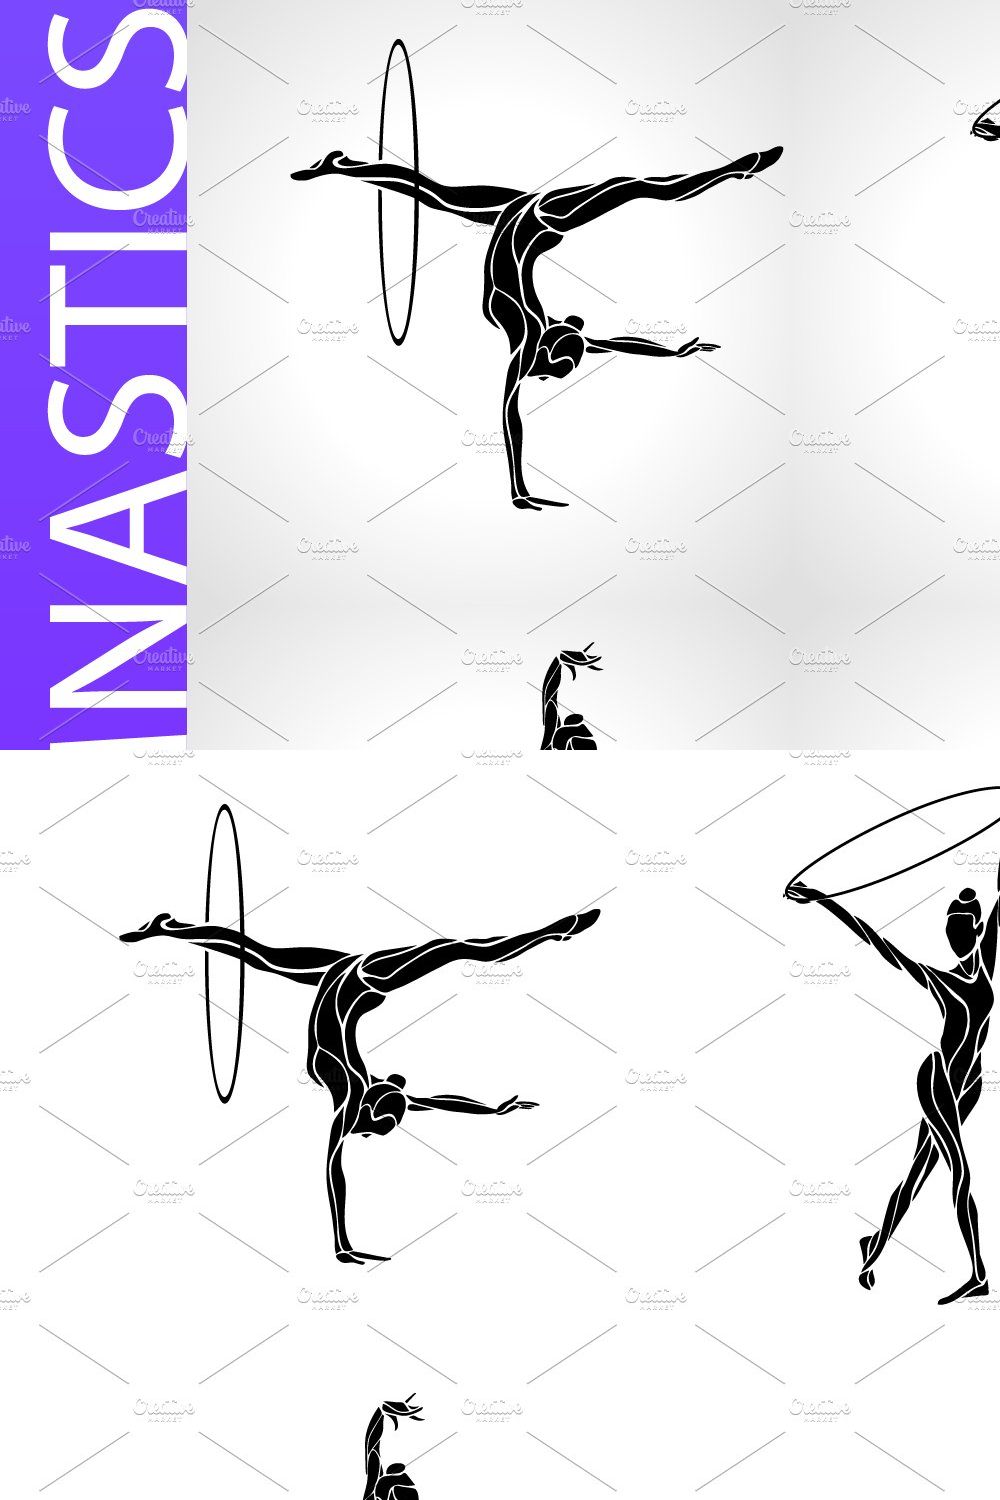 Rhythmic Gymnastics with Hoop set pinterest preview image.